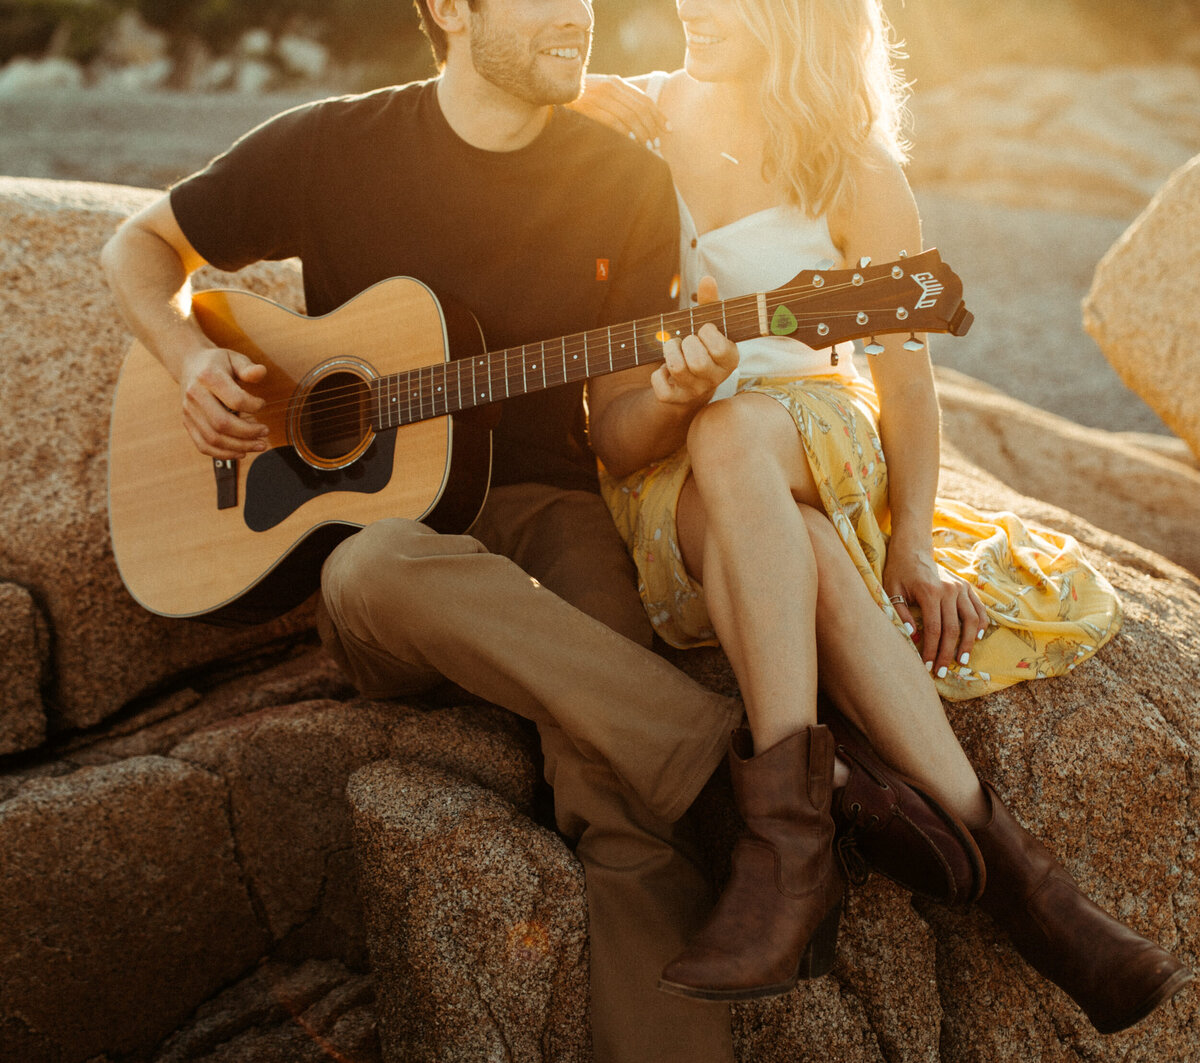 portland-maine-rocky-beach-shoreline-engagement-session-sunset-guitar-5